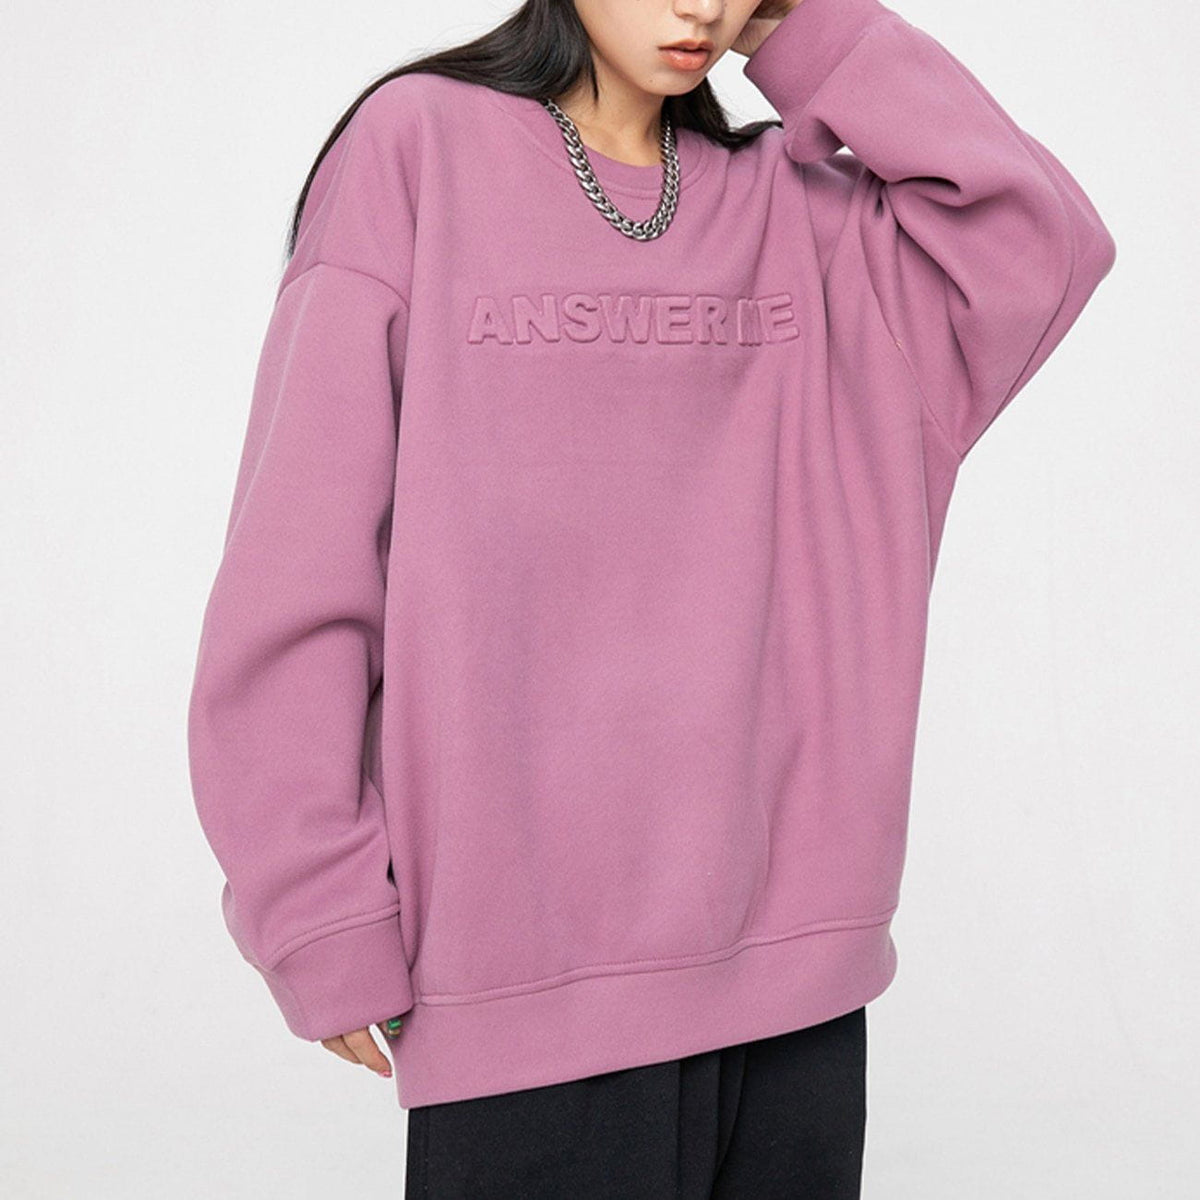 Majesda® - Letter Stamped Sweatshirt outfit ideas streetwear fashion